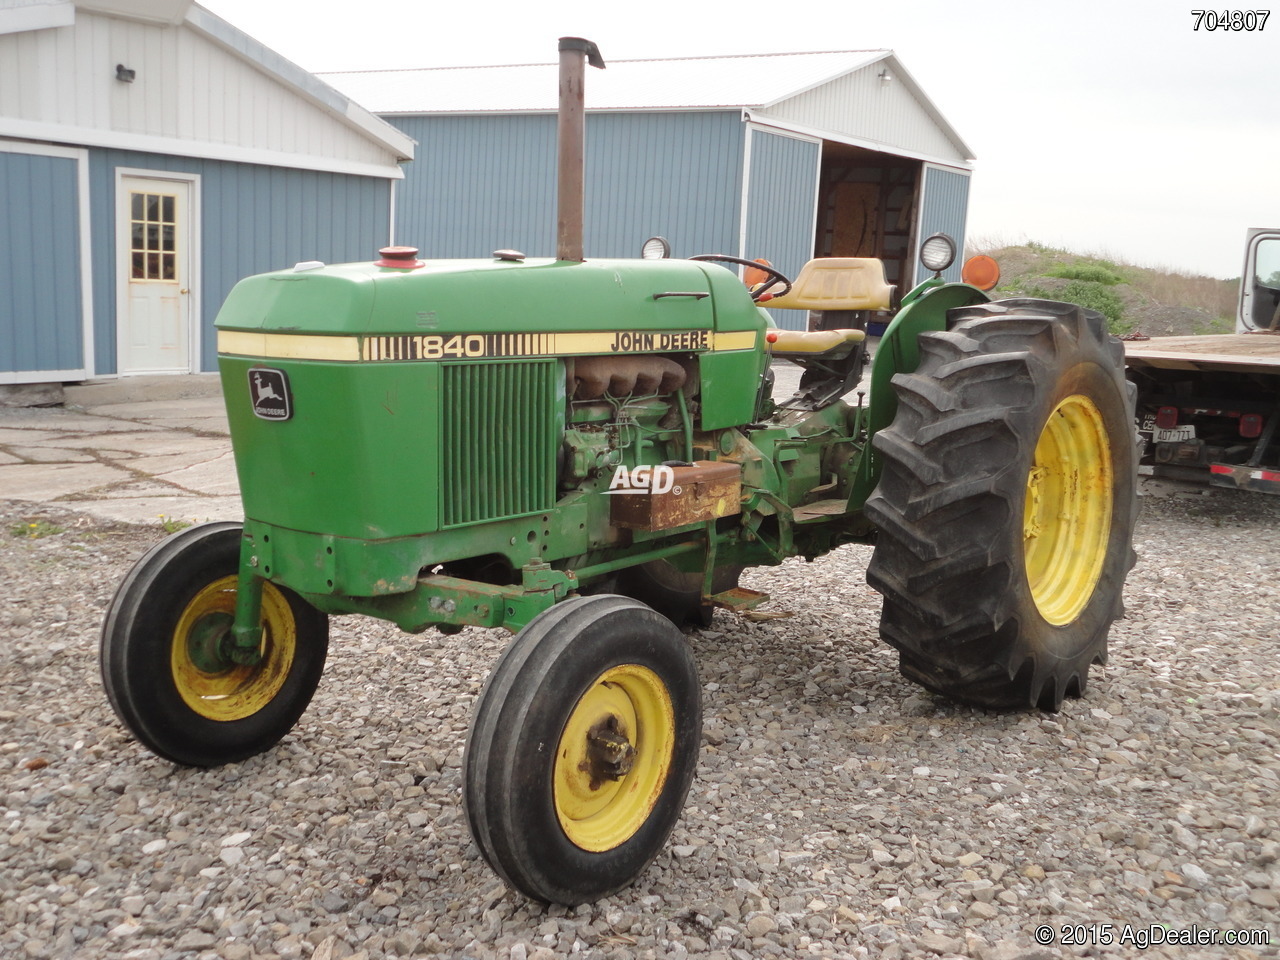 John Deere 1840 Tractor For Sale | AgDealer.com